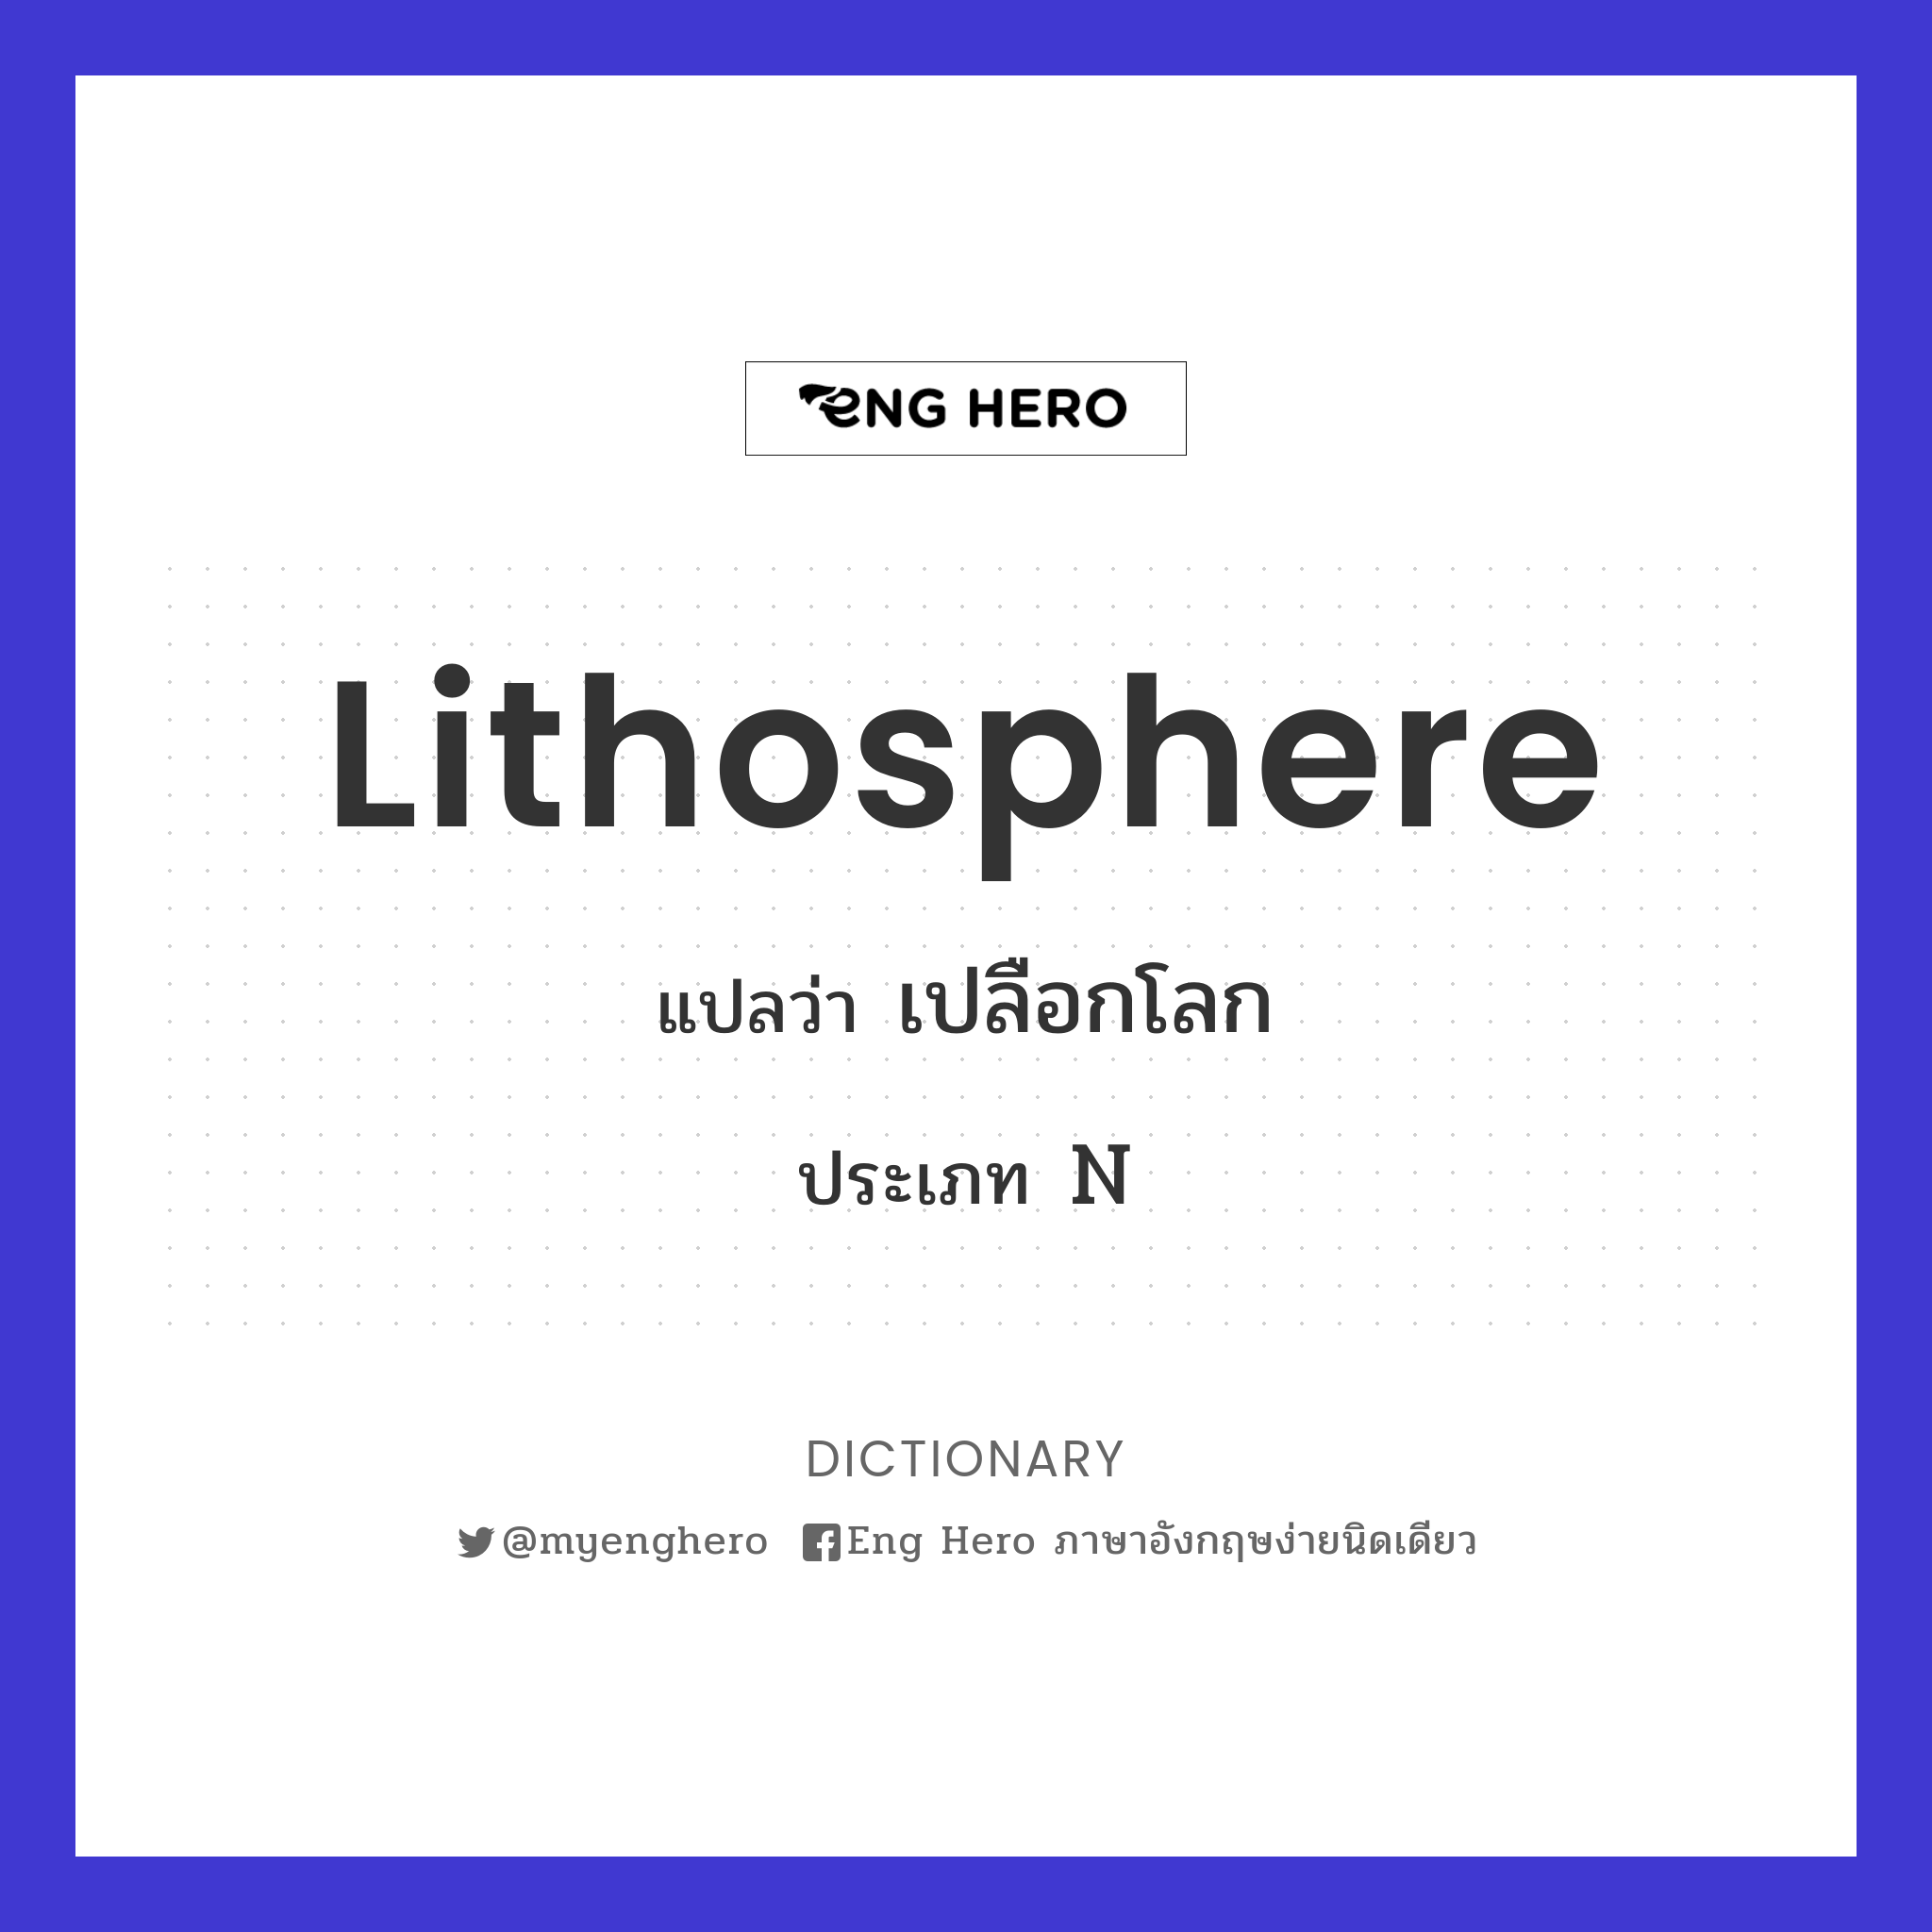 lithosphere